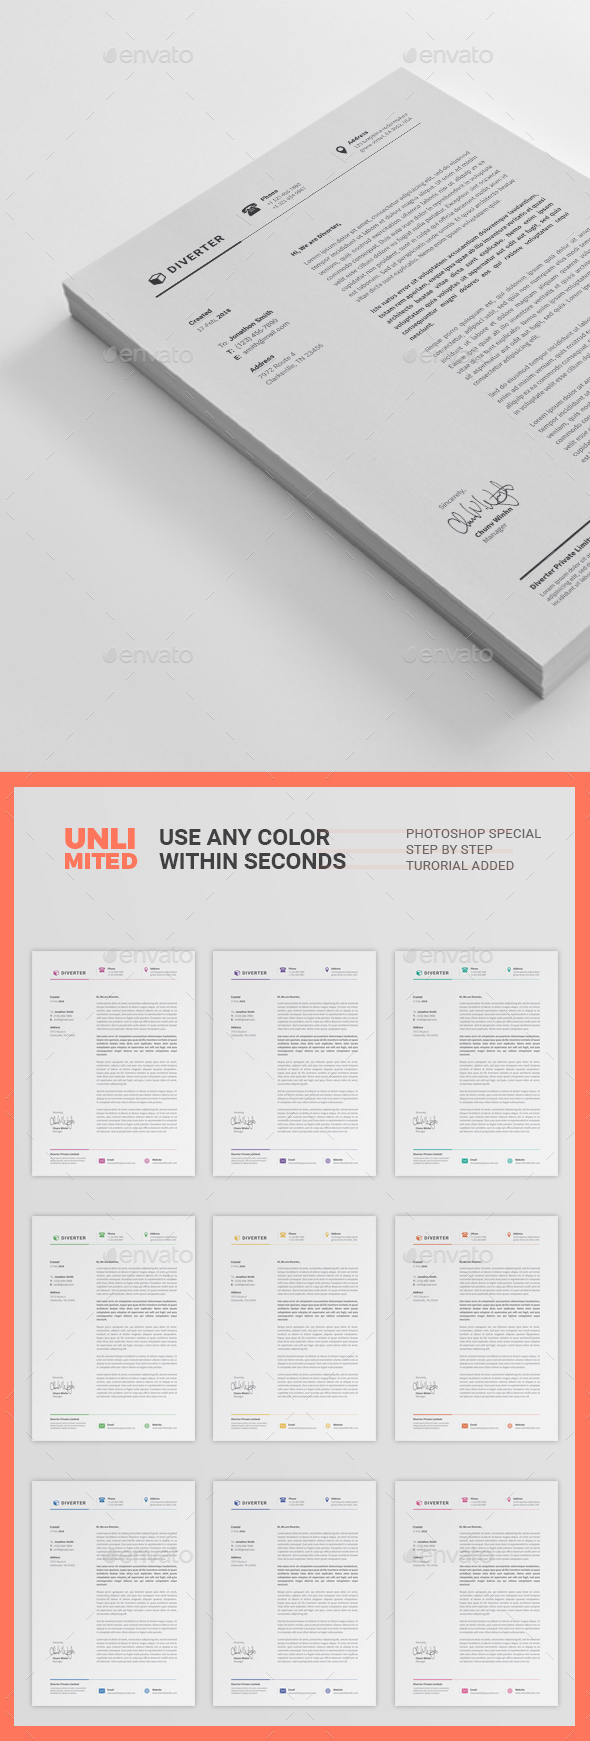 Editable & Flexible Letterhead